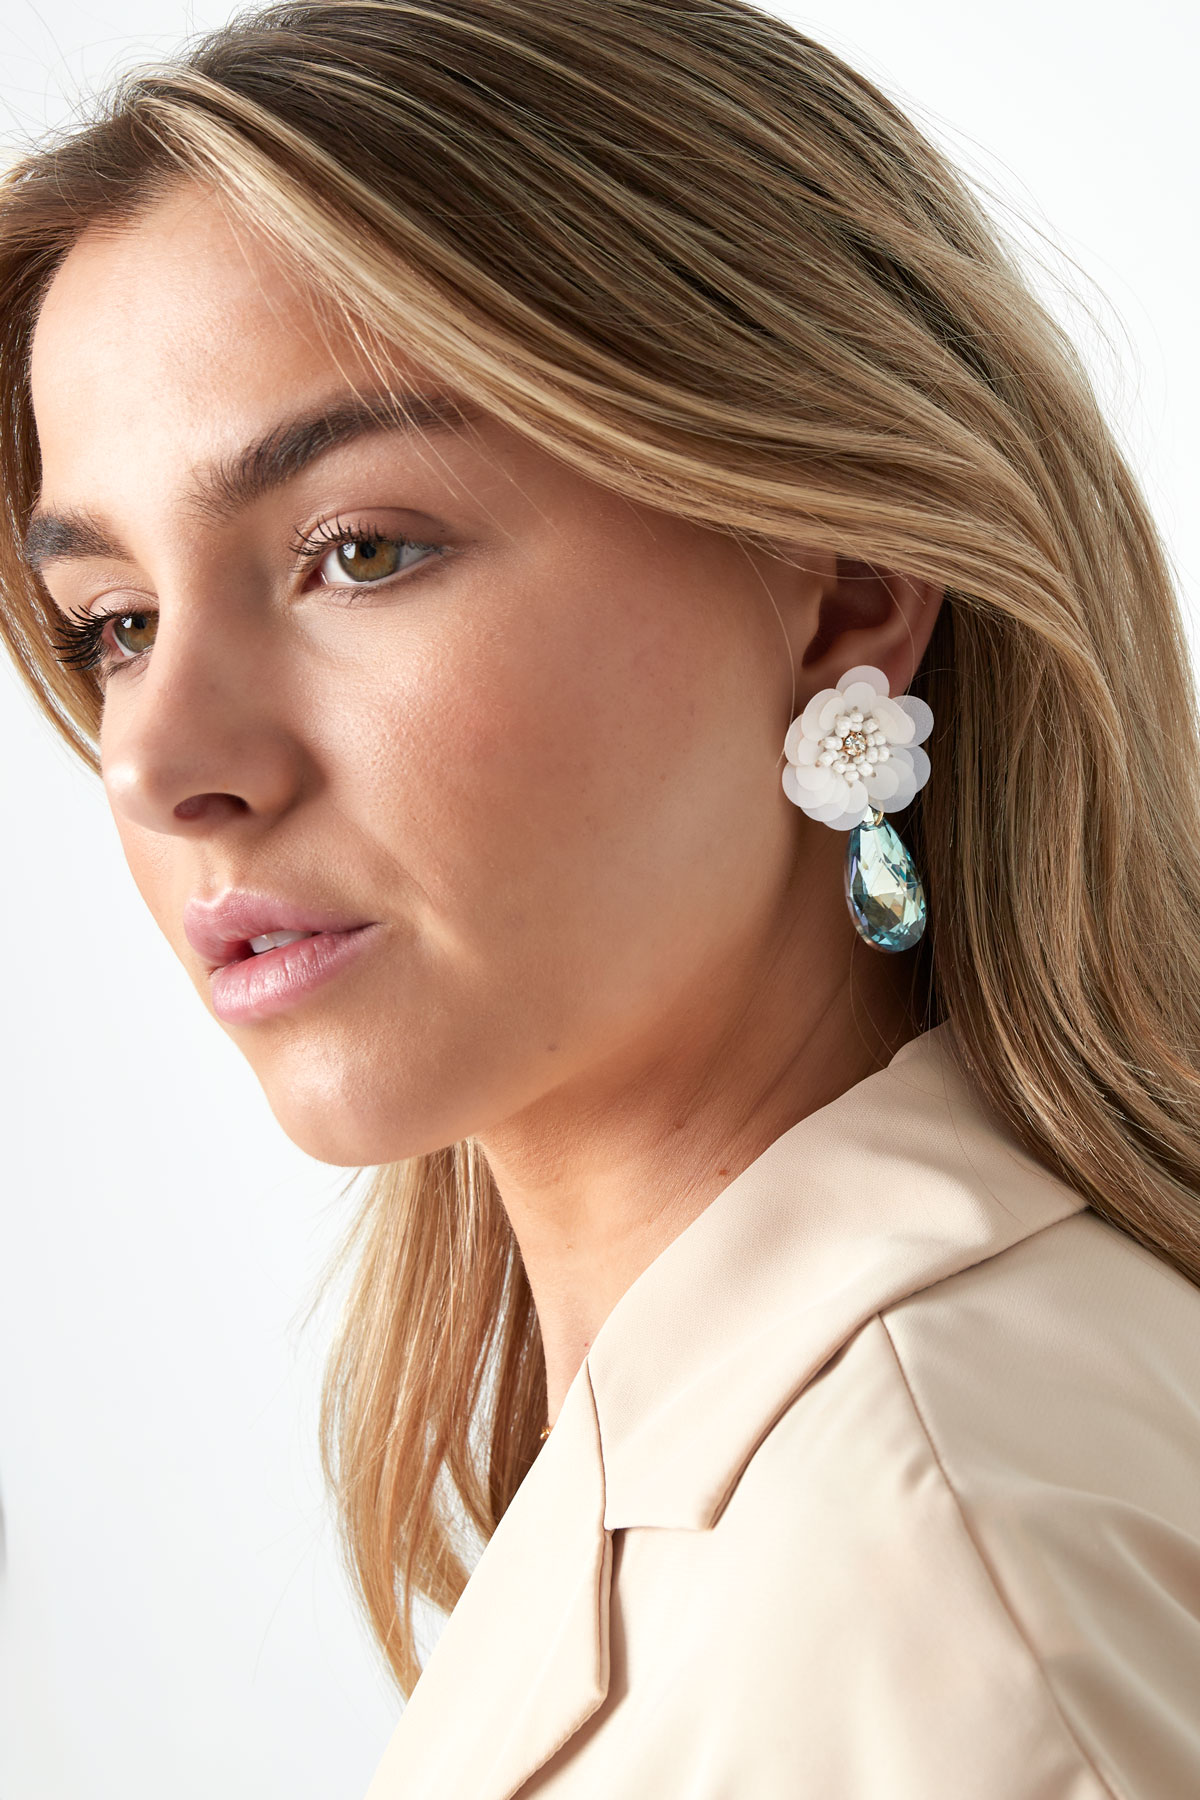 Flower earrings with drop Earrings h5 Picture4